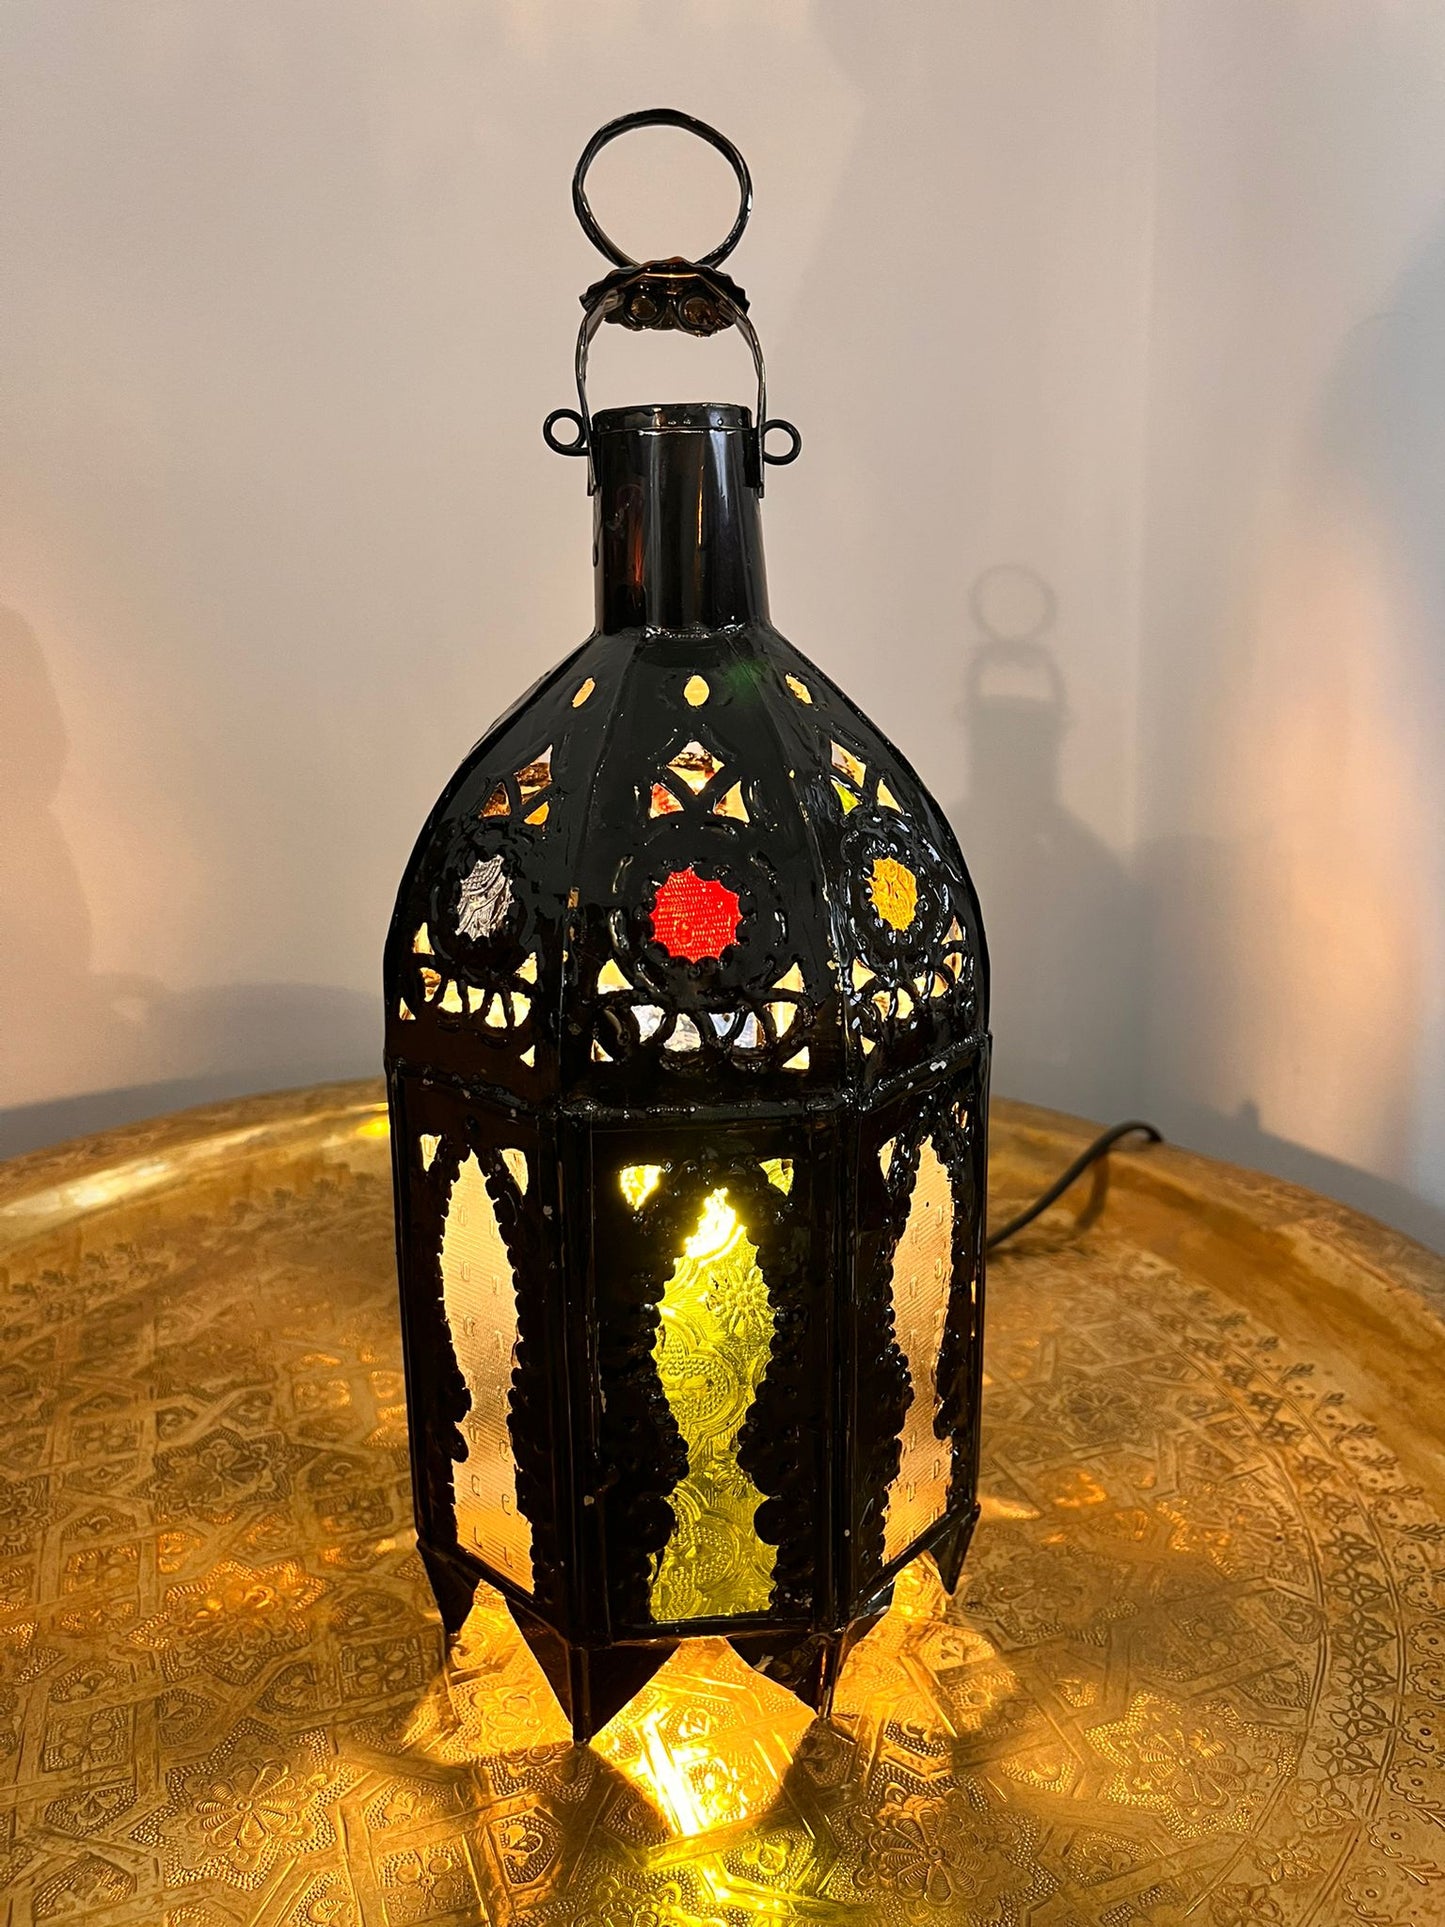 Handgemaakte Marokkaanse Lamp - Drie Maten Beschikbaar: Groot (54cm), Medium (43cm), Mini (33cm)